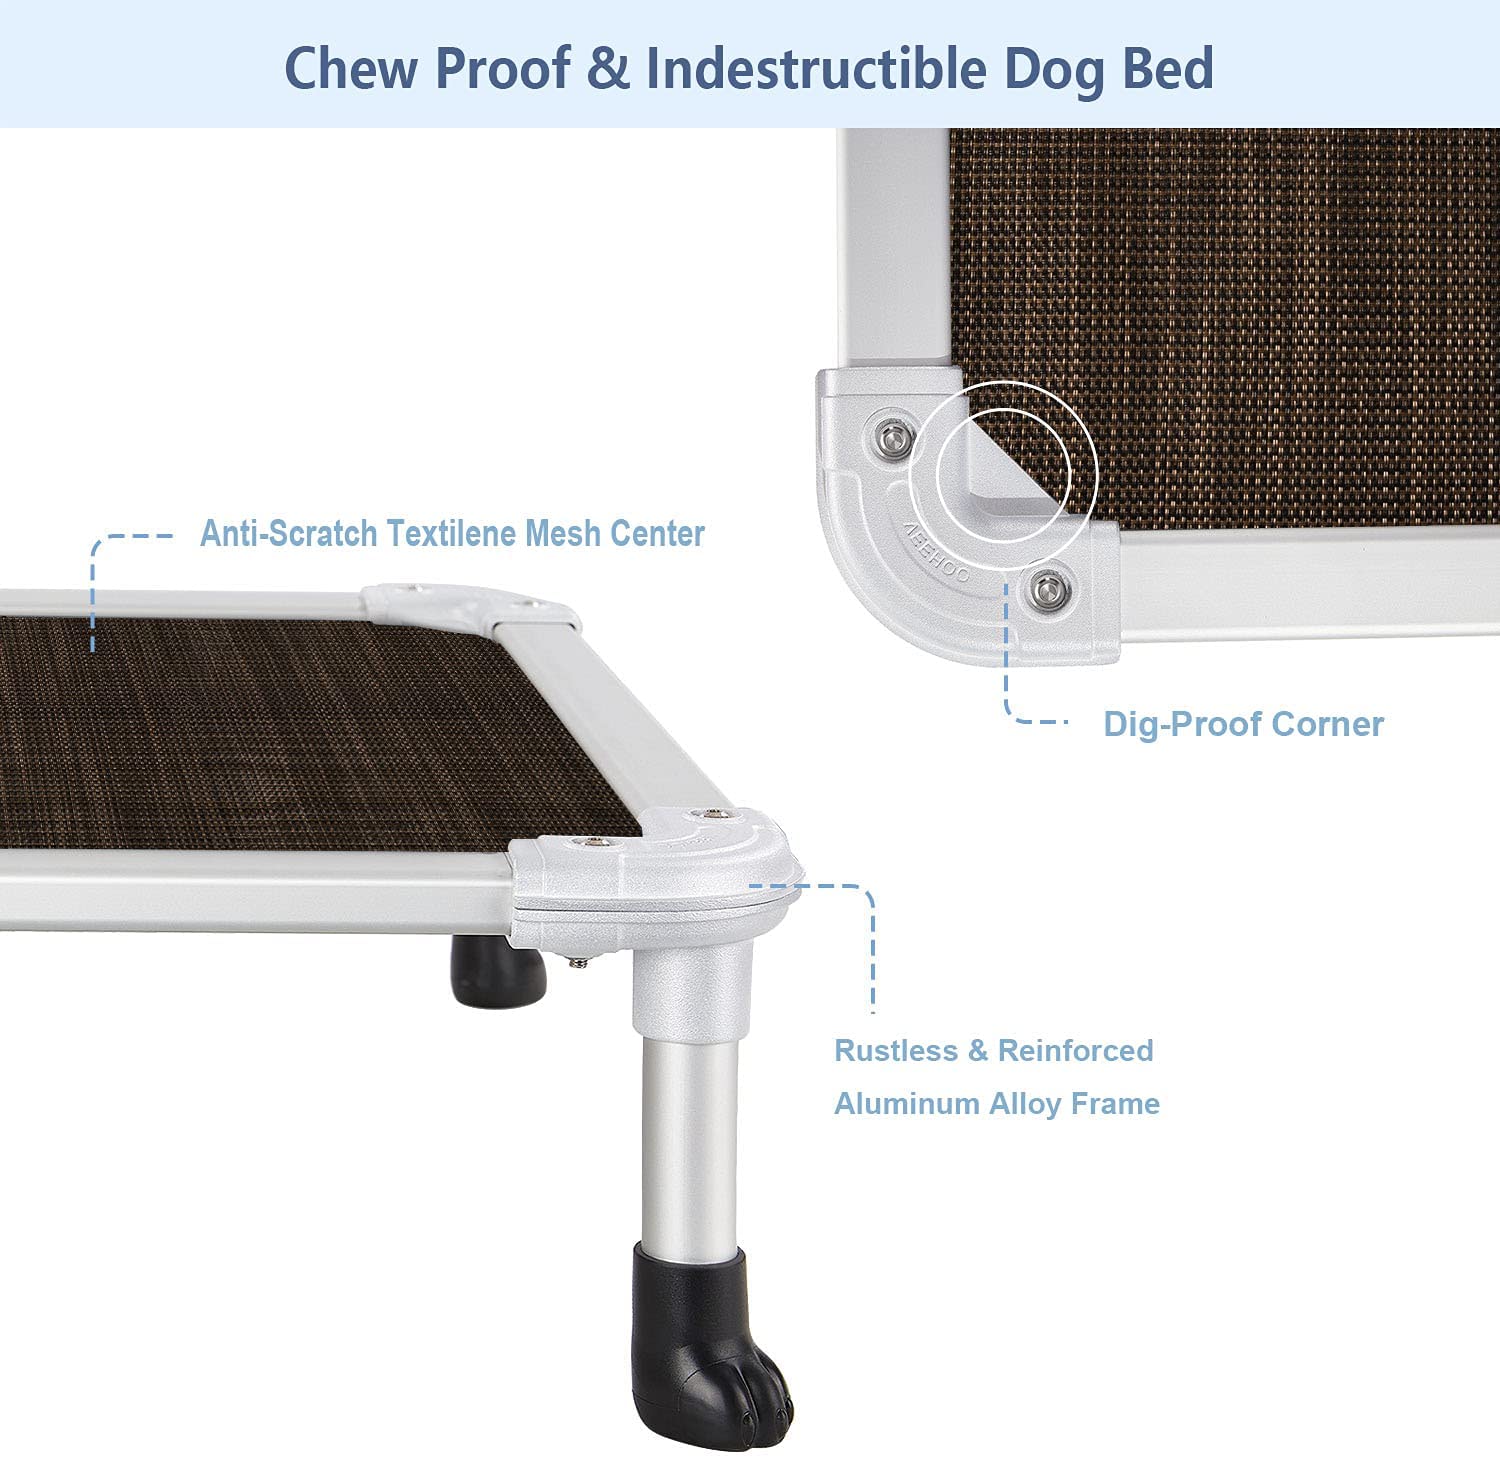 Chew-proof raised bed